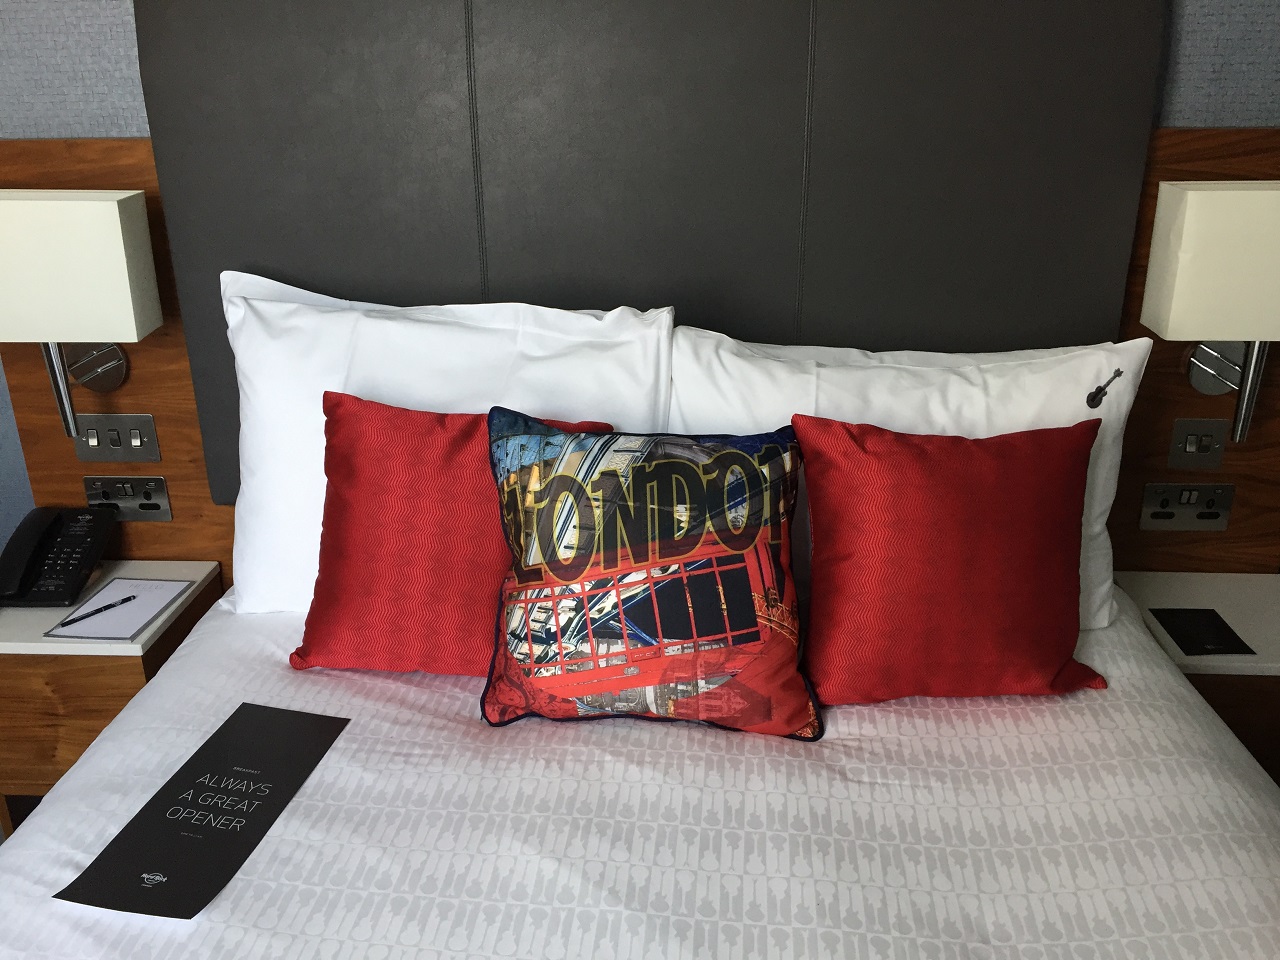 Hard Rock Hotel London bedding decor